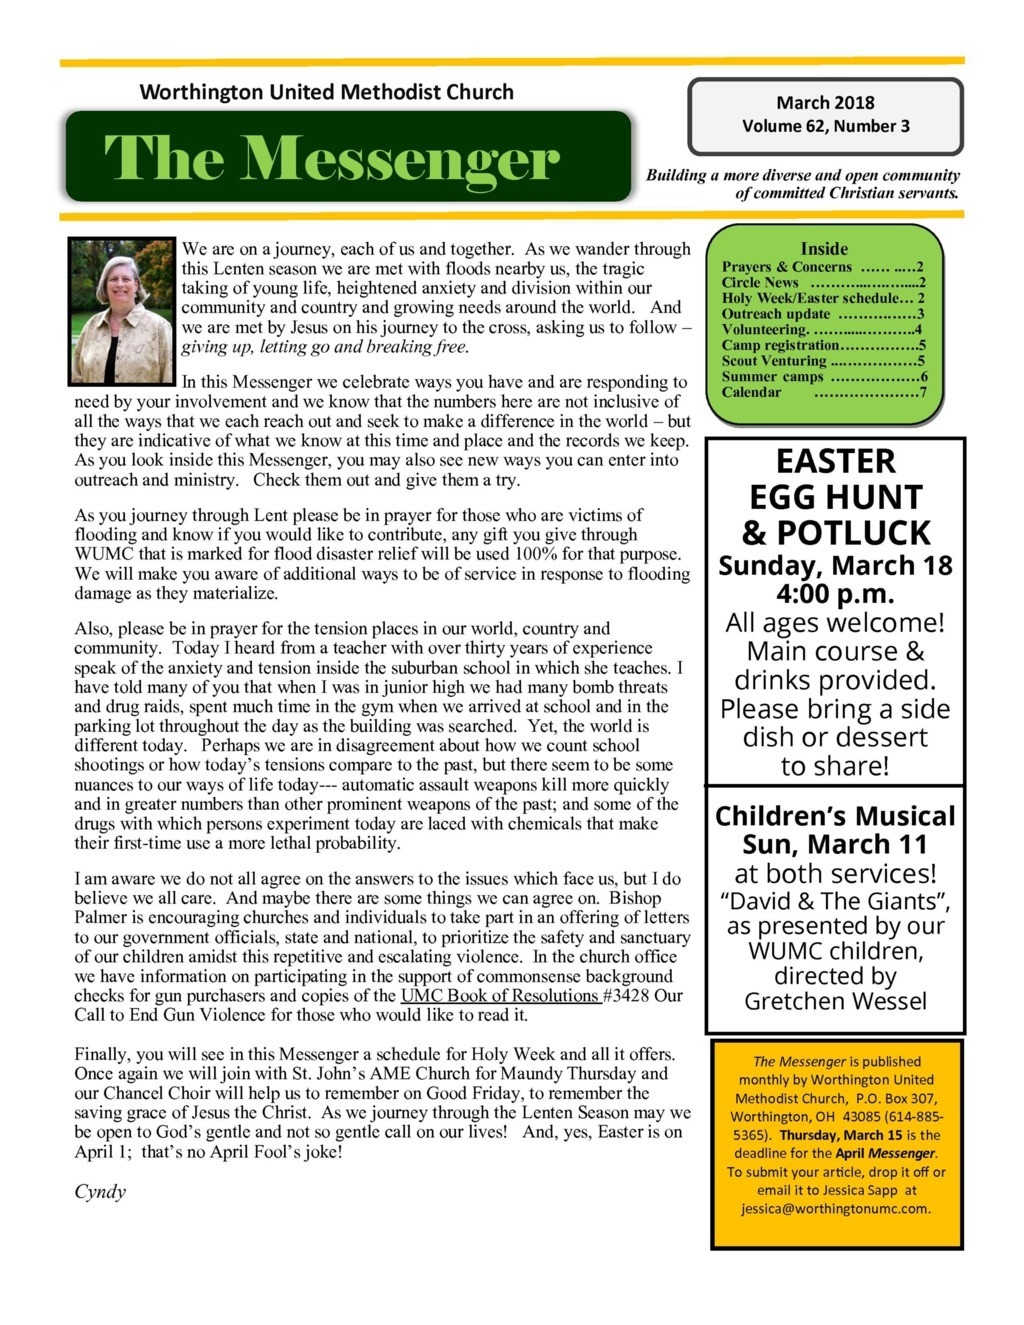 The Messenger, March, 2018 - Worthington United Methodist Church  Unite Methodist Calender - Christian Calender Year Subjects